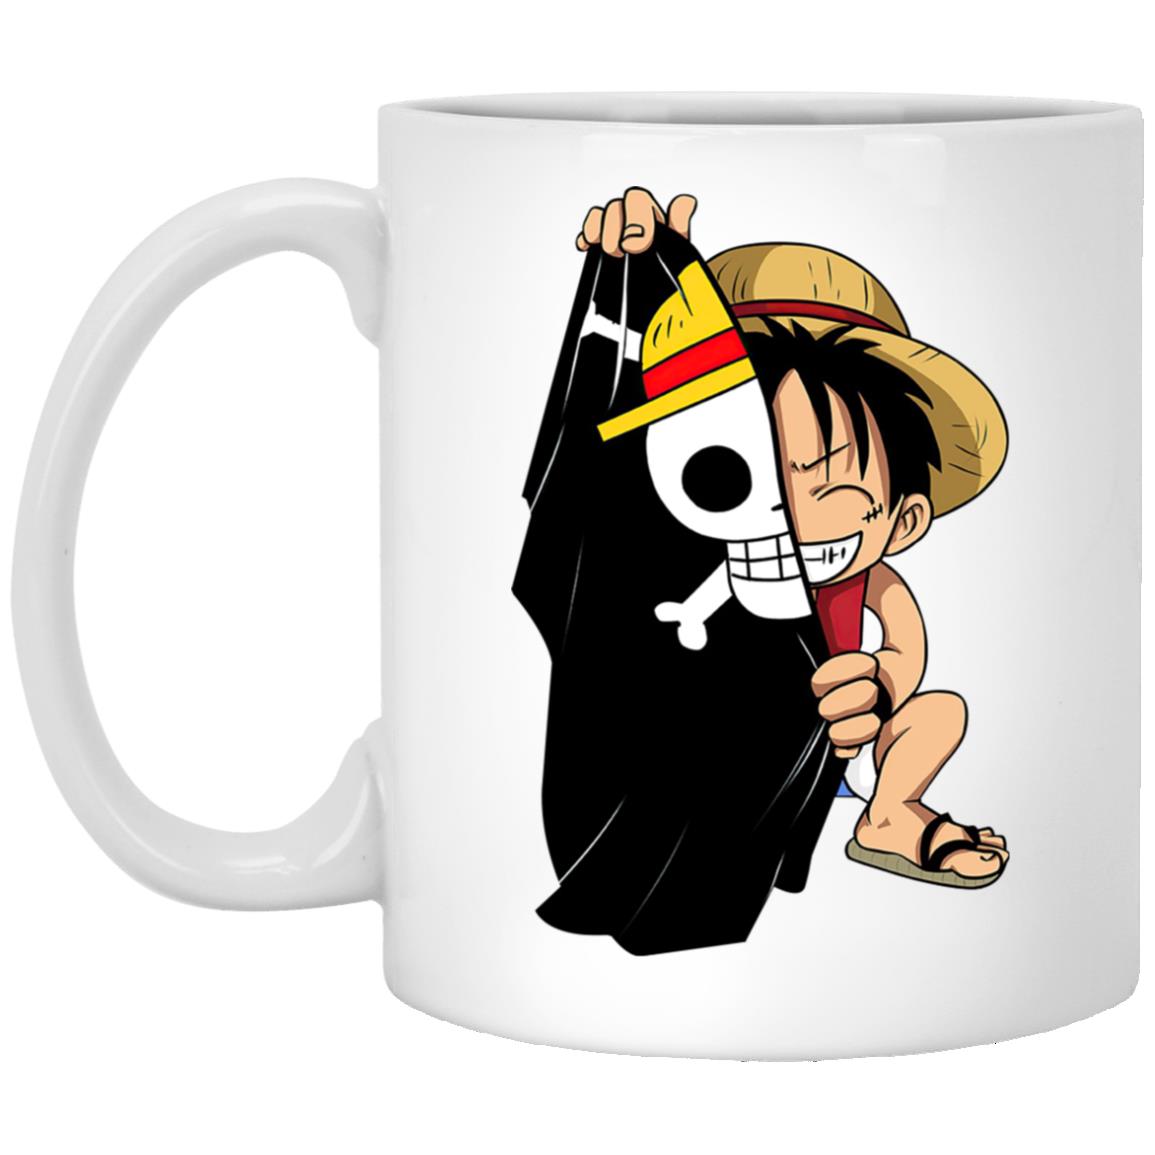 One Piece Parodic Happy Birthday Mug with Designed handle, interior and  exterior - Luffy and Gollum - My Precious (Funny One Piece Parody - High